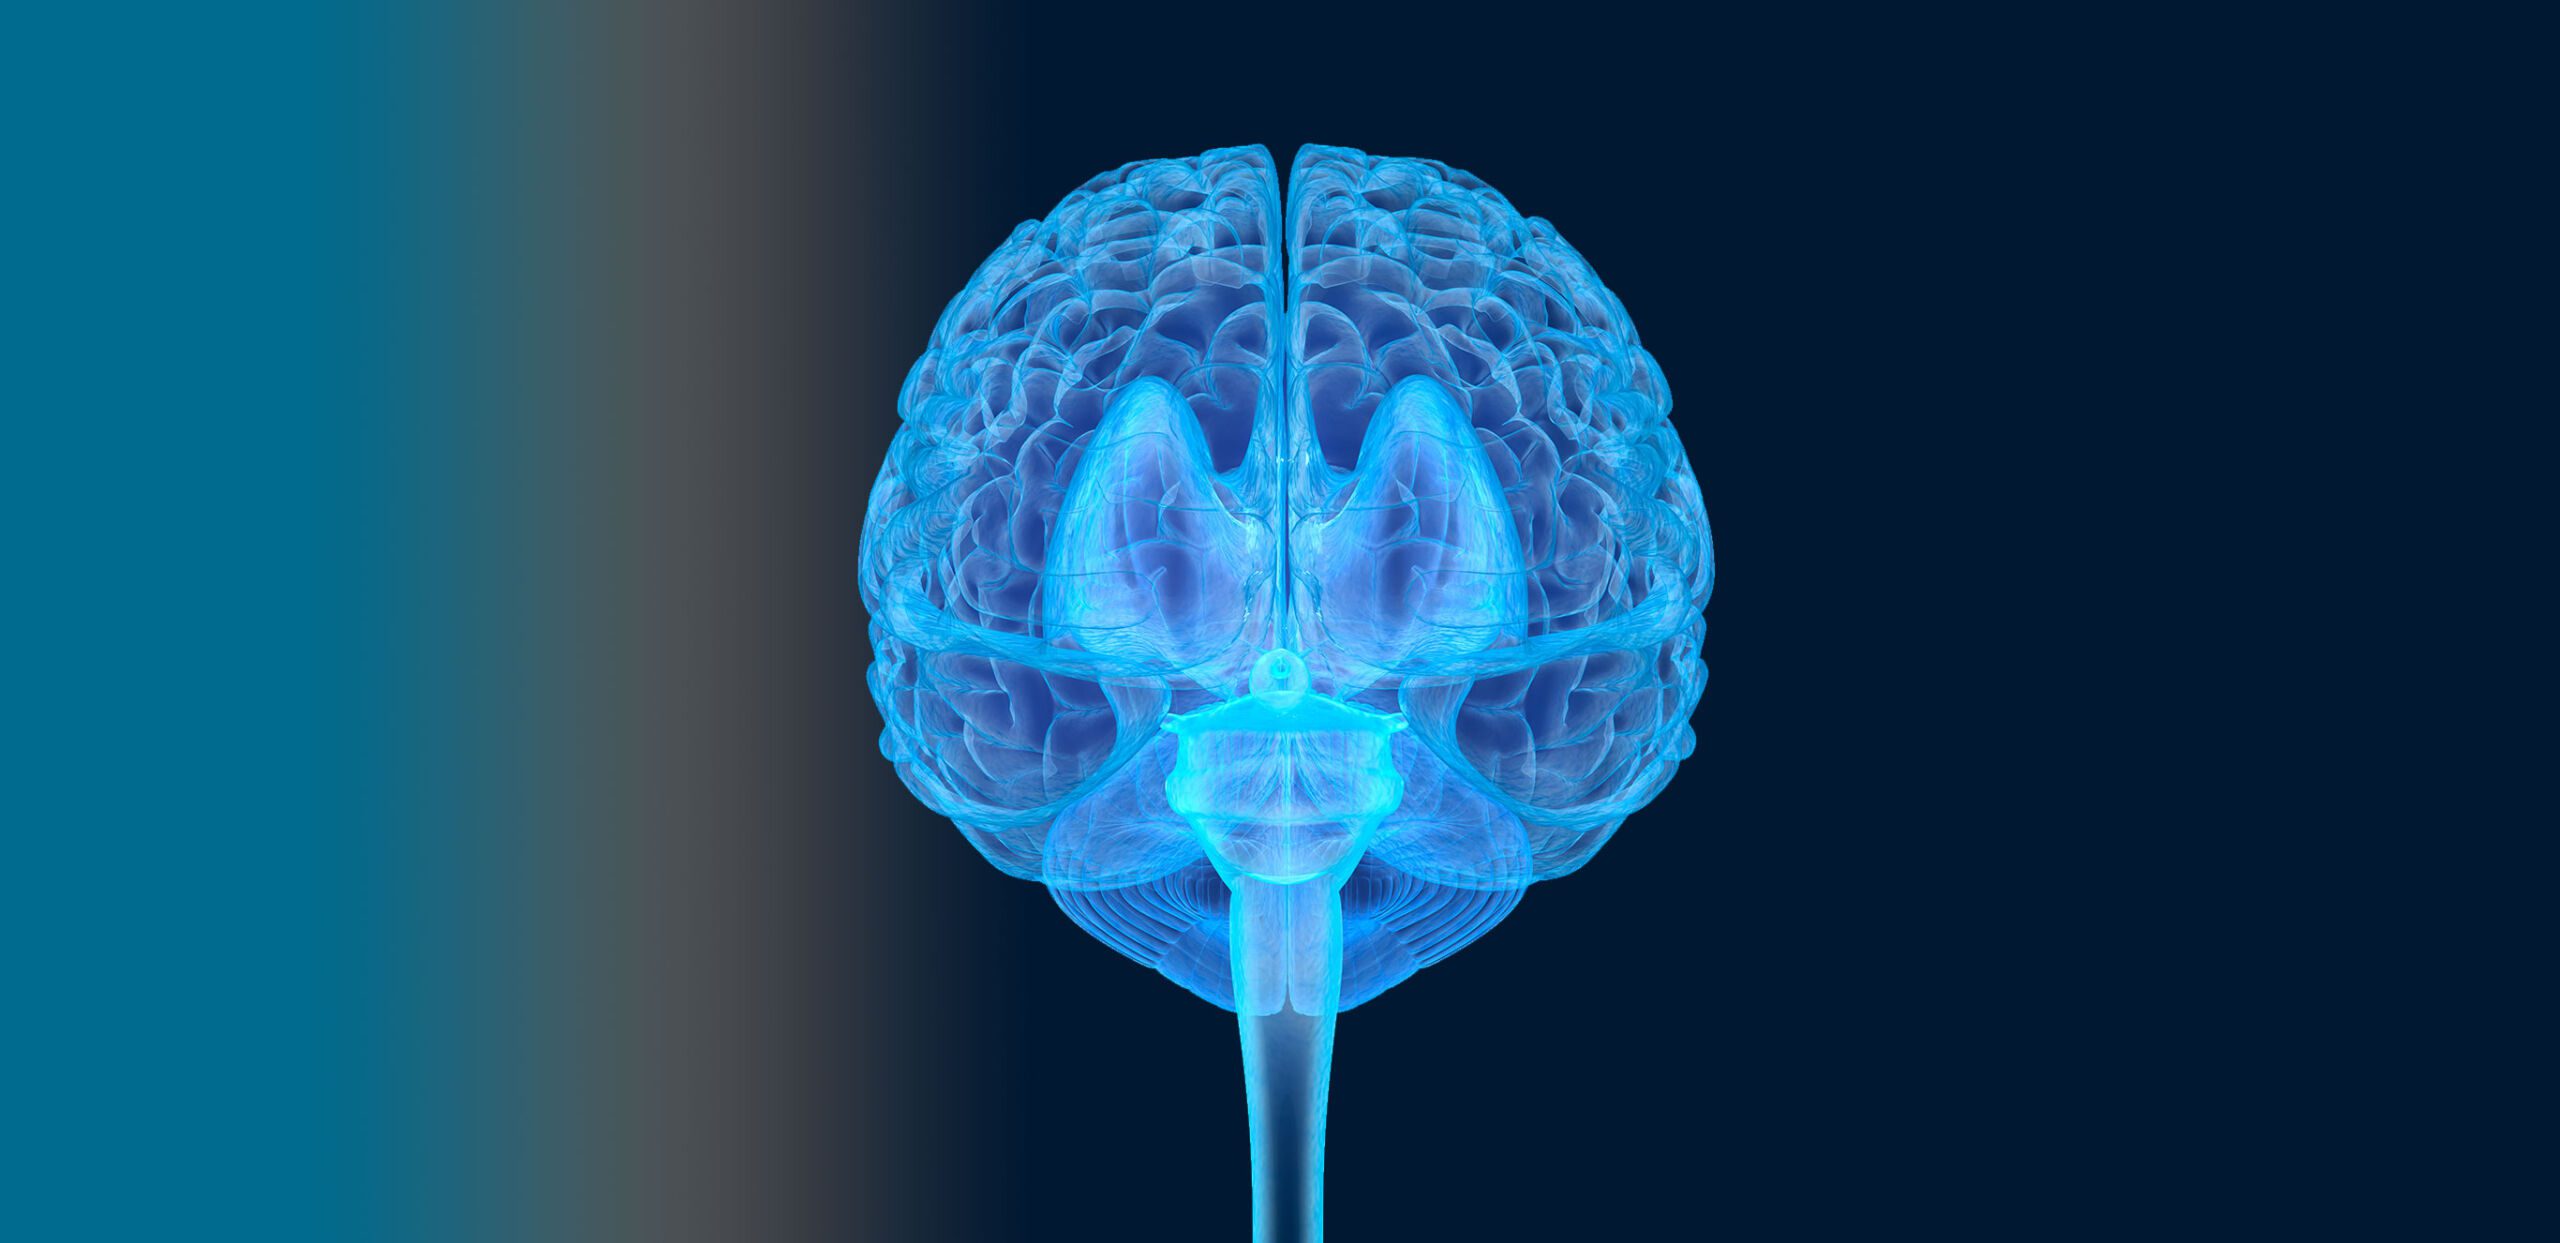 Image of human brain and brain stem, Cooley Dickinson Medical Group Neurology, Northampton, MA 01060.